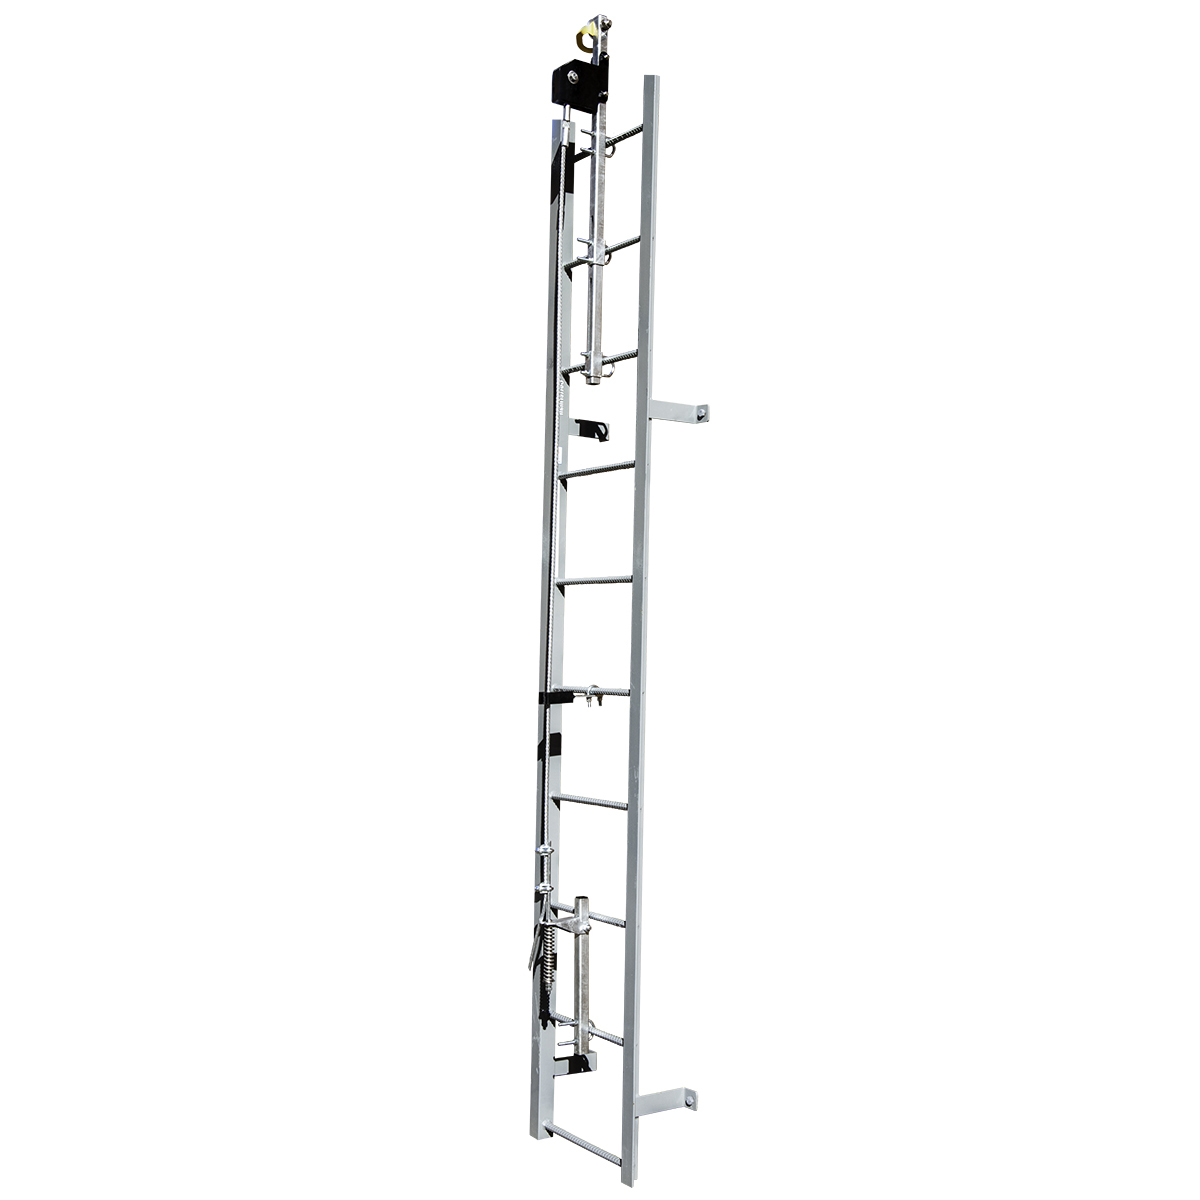 SafeWaze 70' VLL Cable Ladder System, 4-person Complete Kit